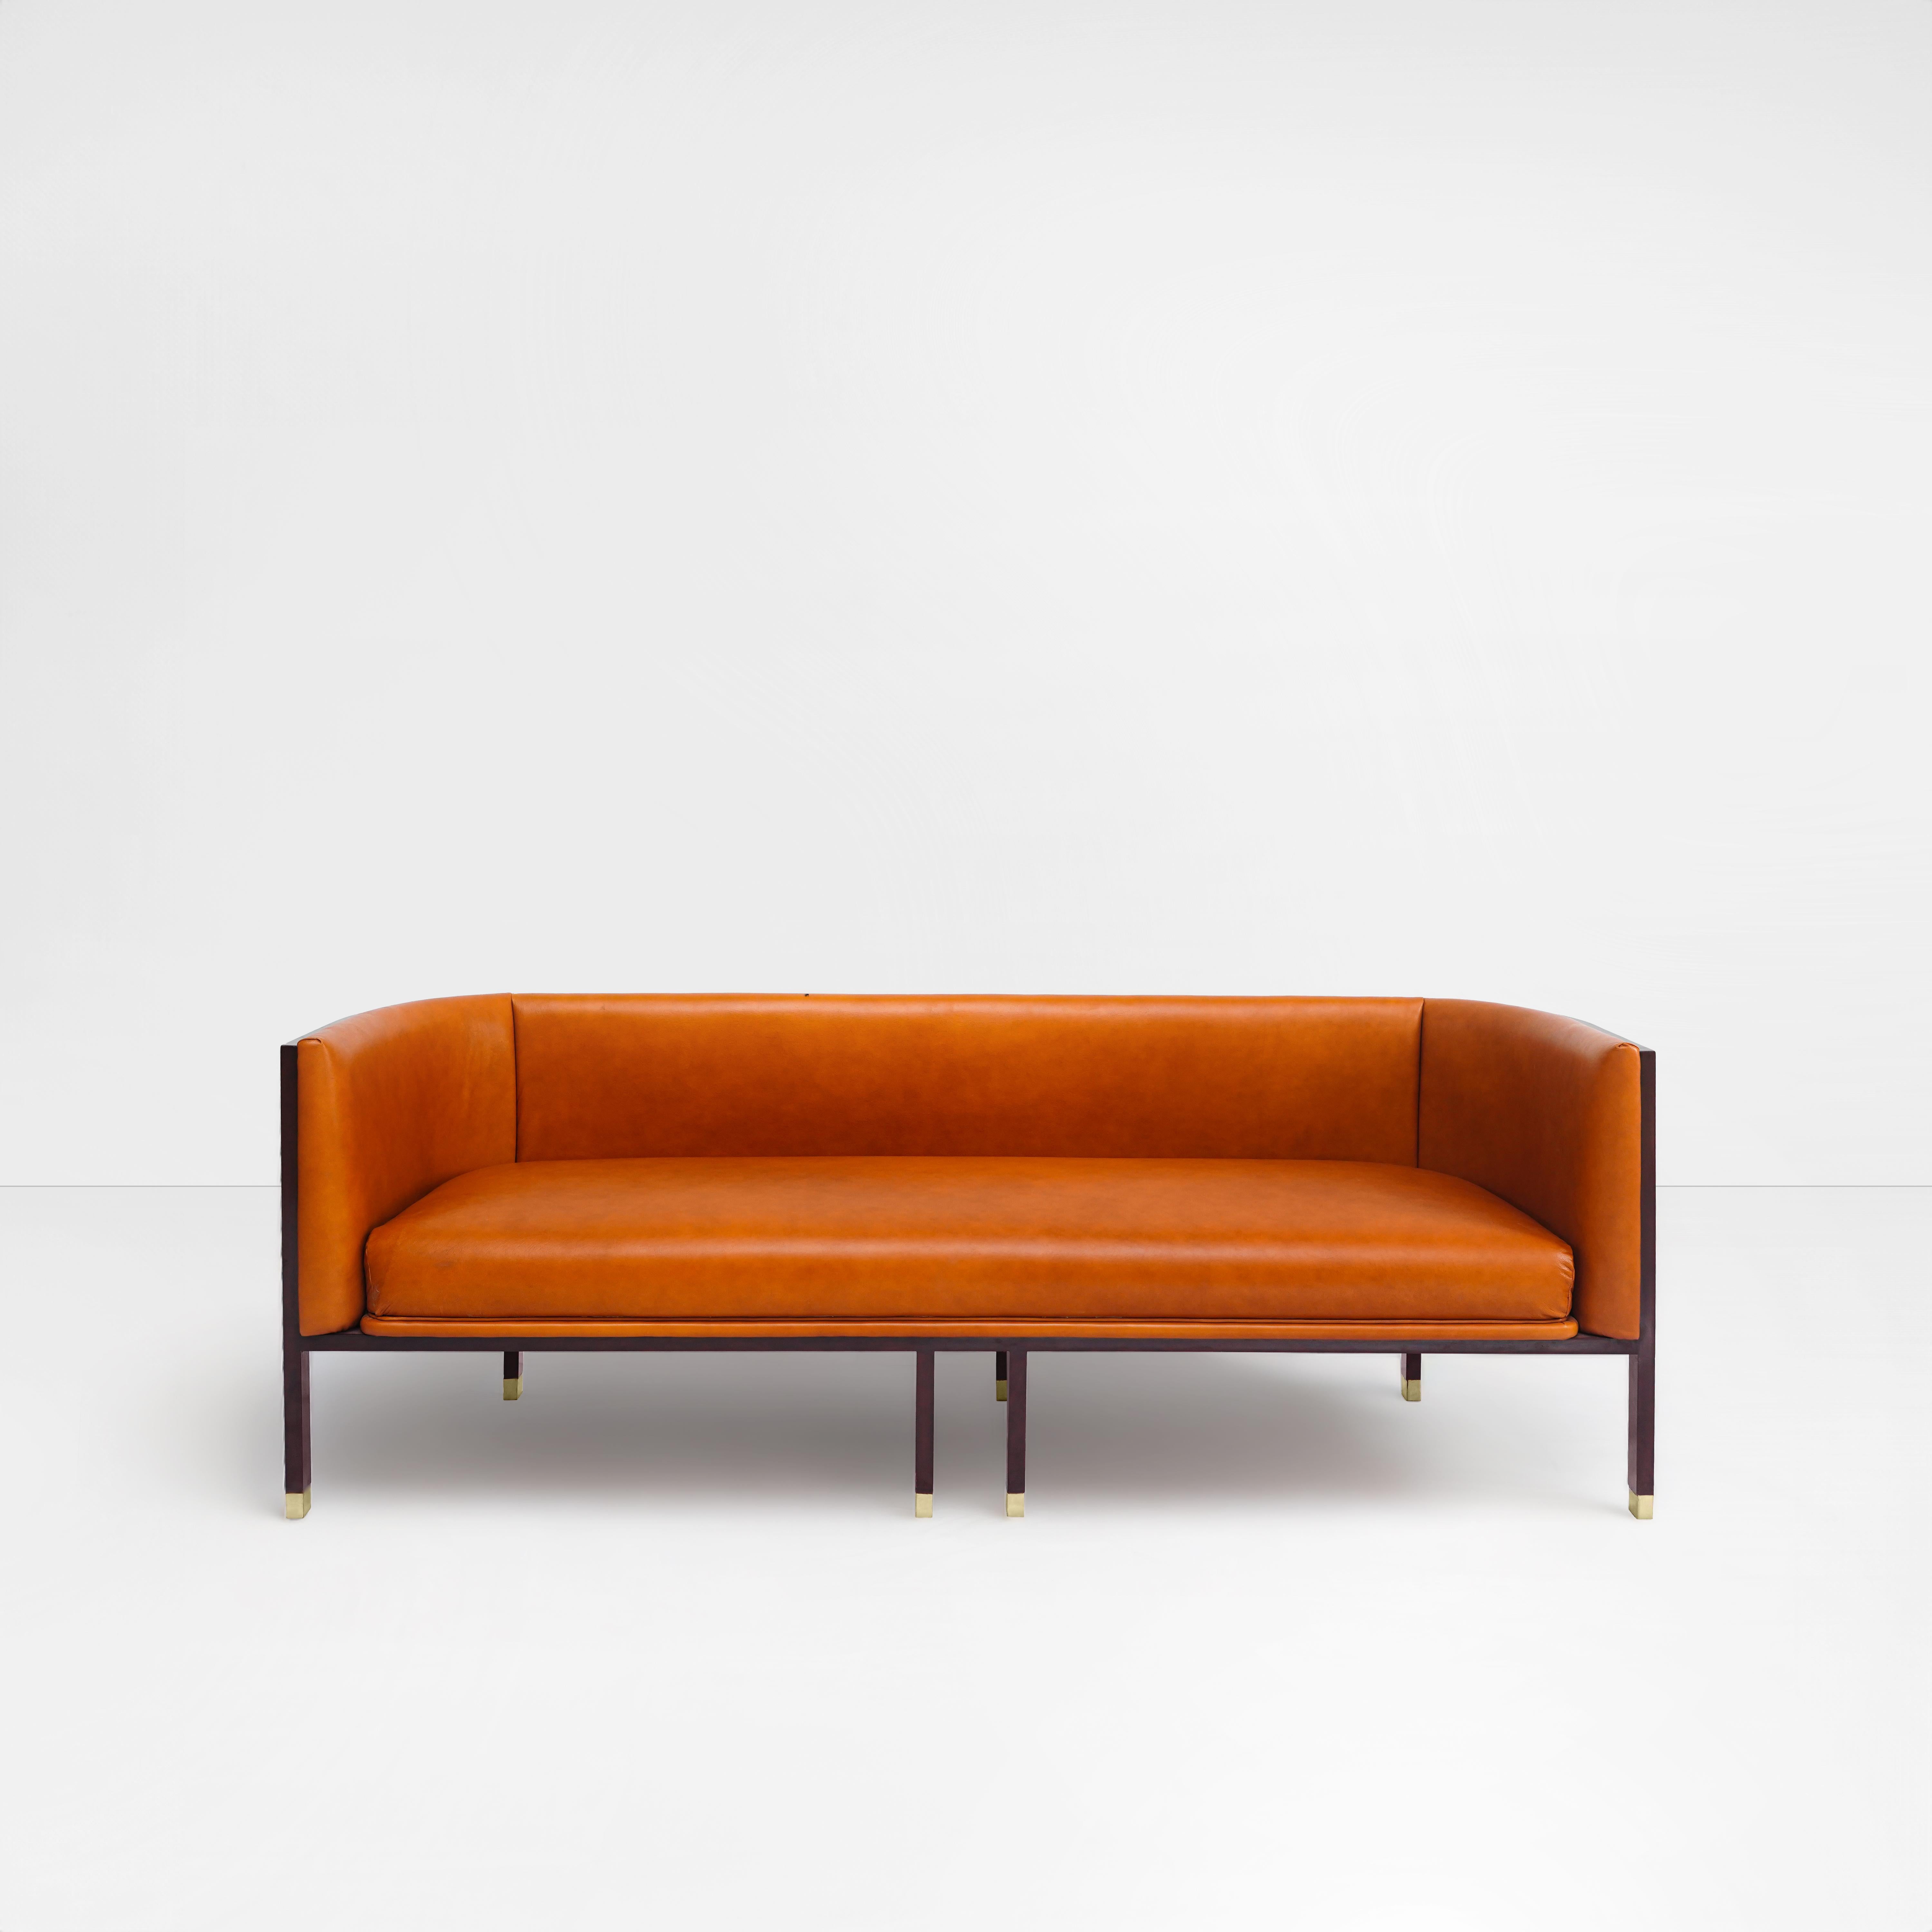 Original lounge sofa, Barrel sofa, round back chair, bold, modern, walnut wood